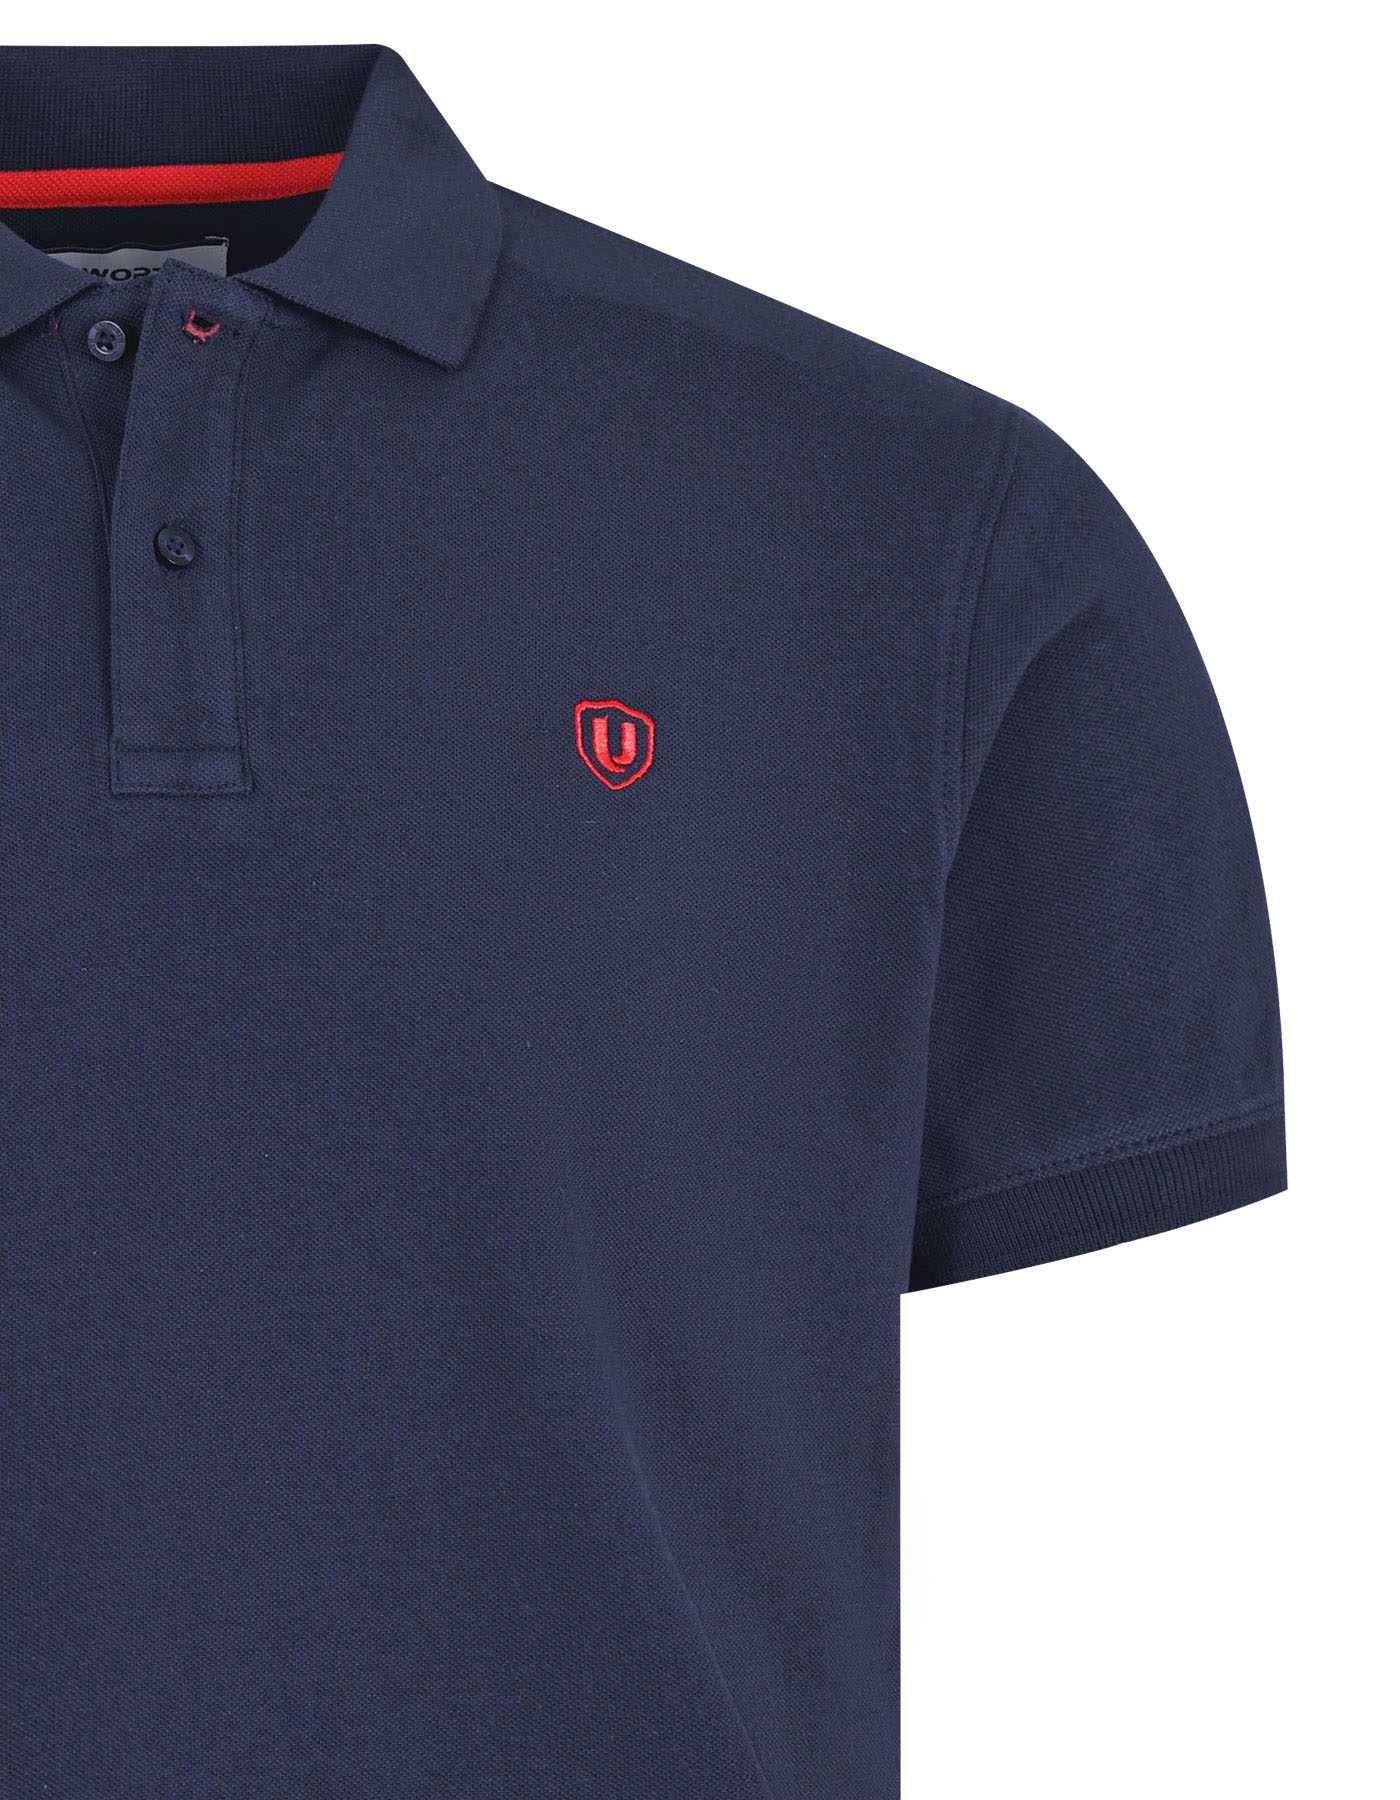 Navy Cotton Polo Shirt For Men |Uniworth